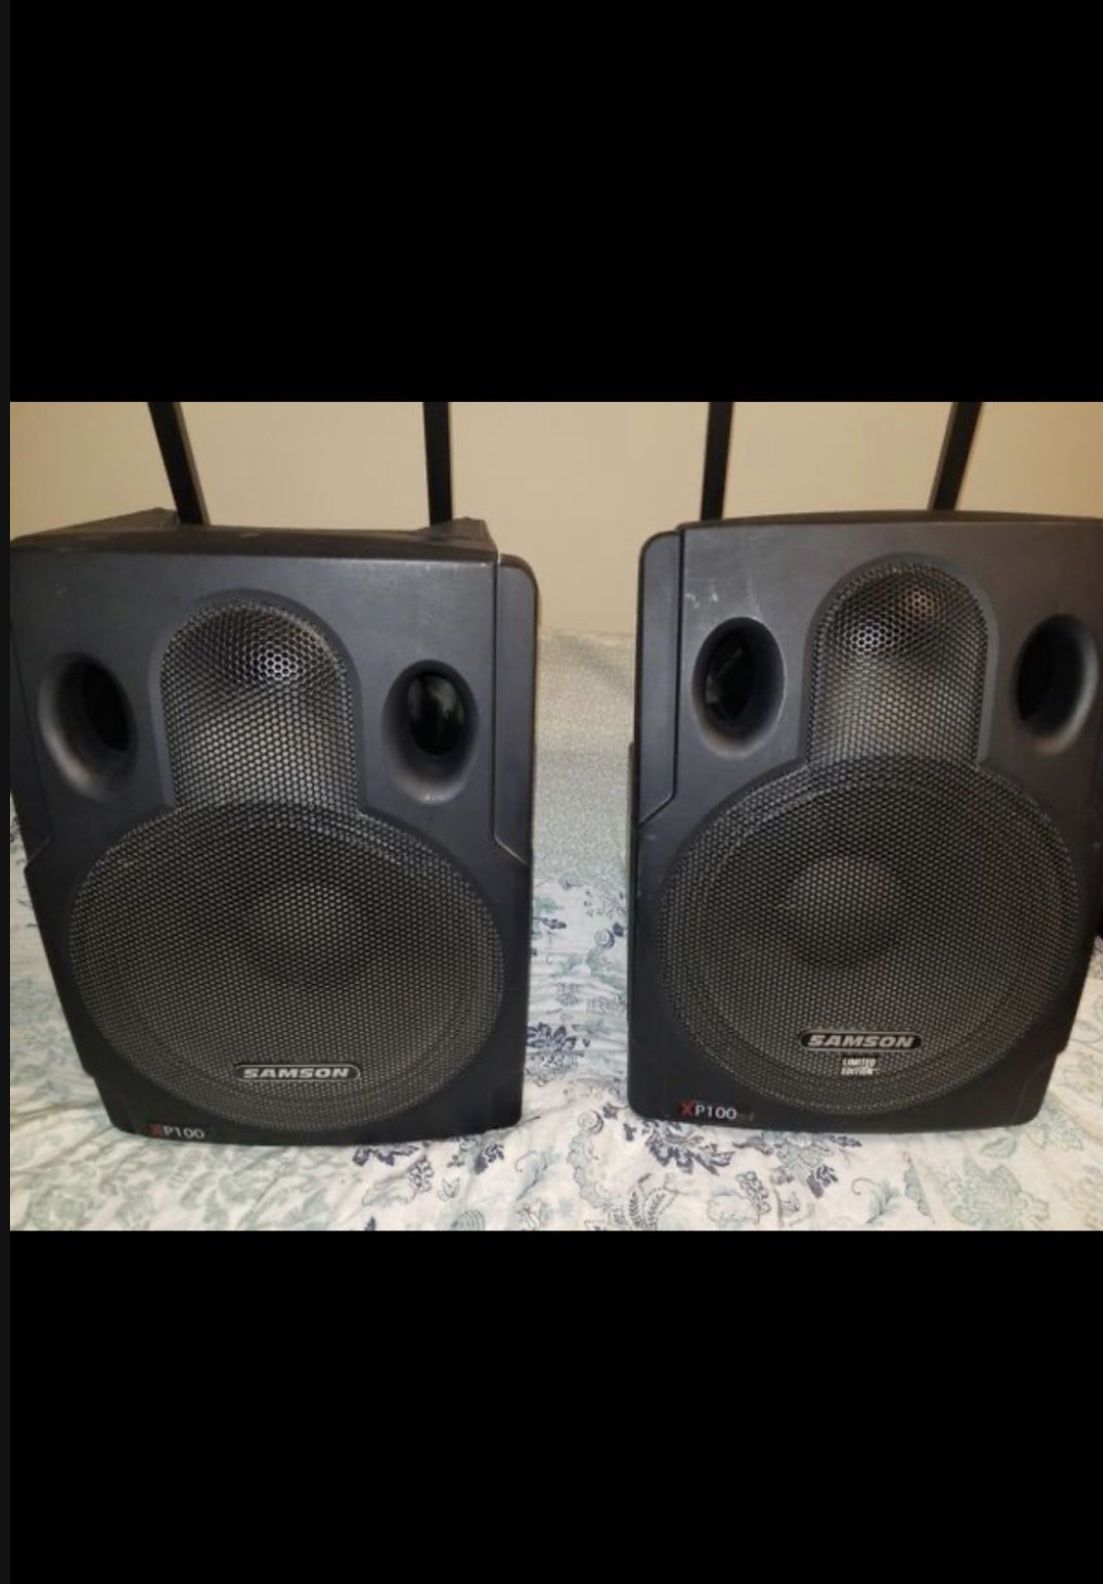 SAMSON XP200 power speakers (pair) $160